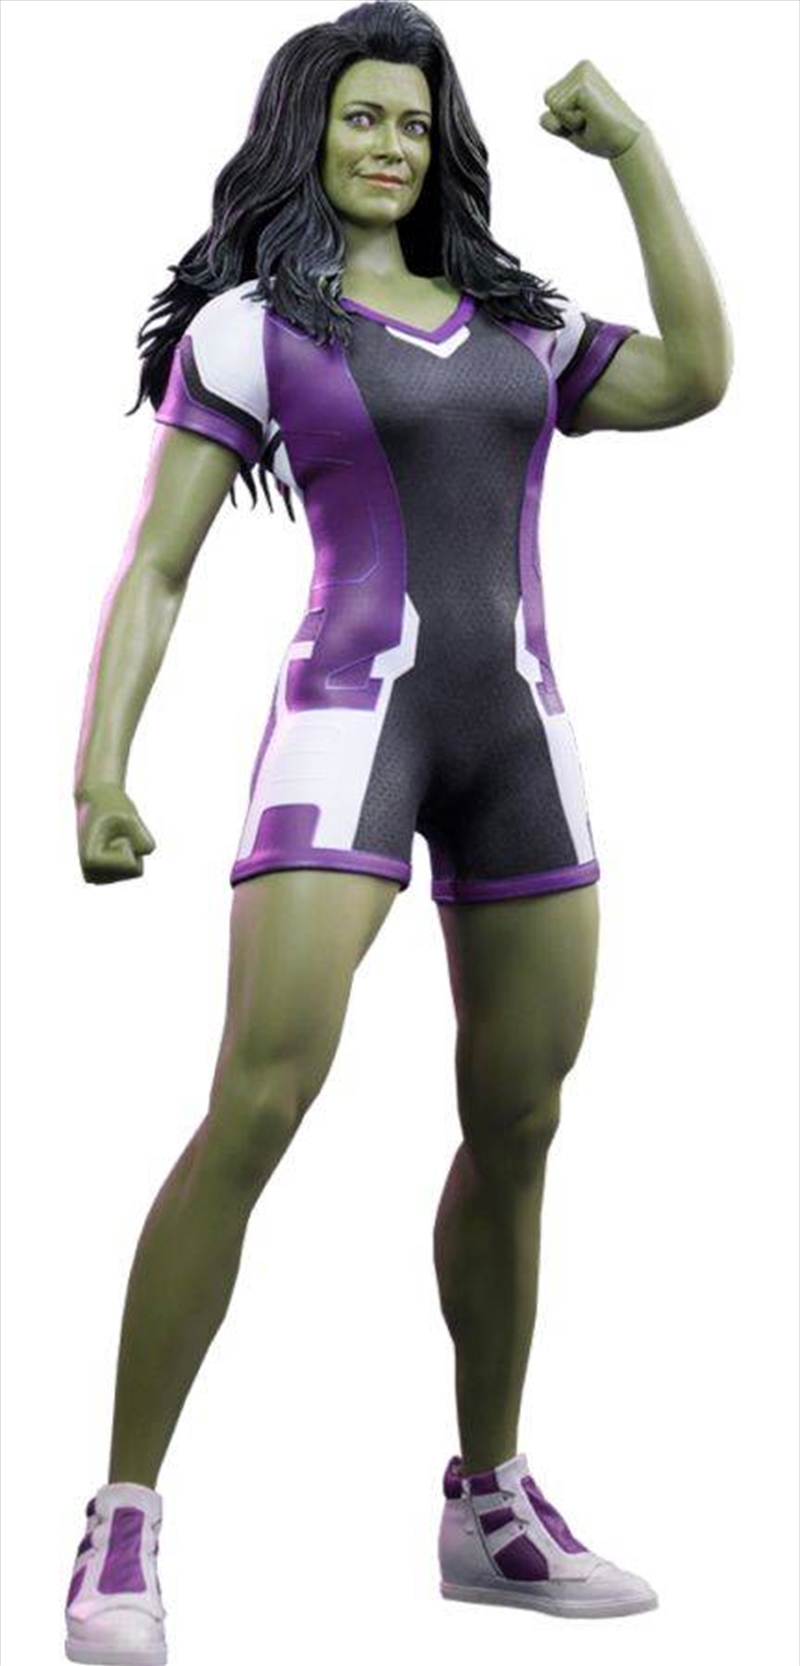 She-Hulk (TV) - She-Hulk 1:6 Figure/Product Detail/Figurines